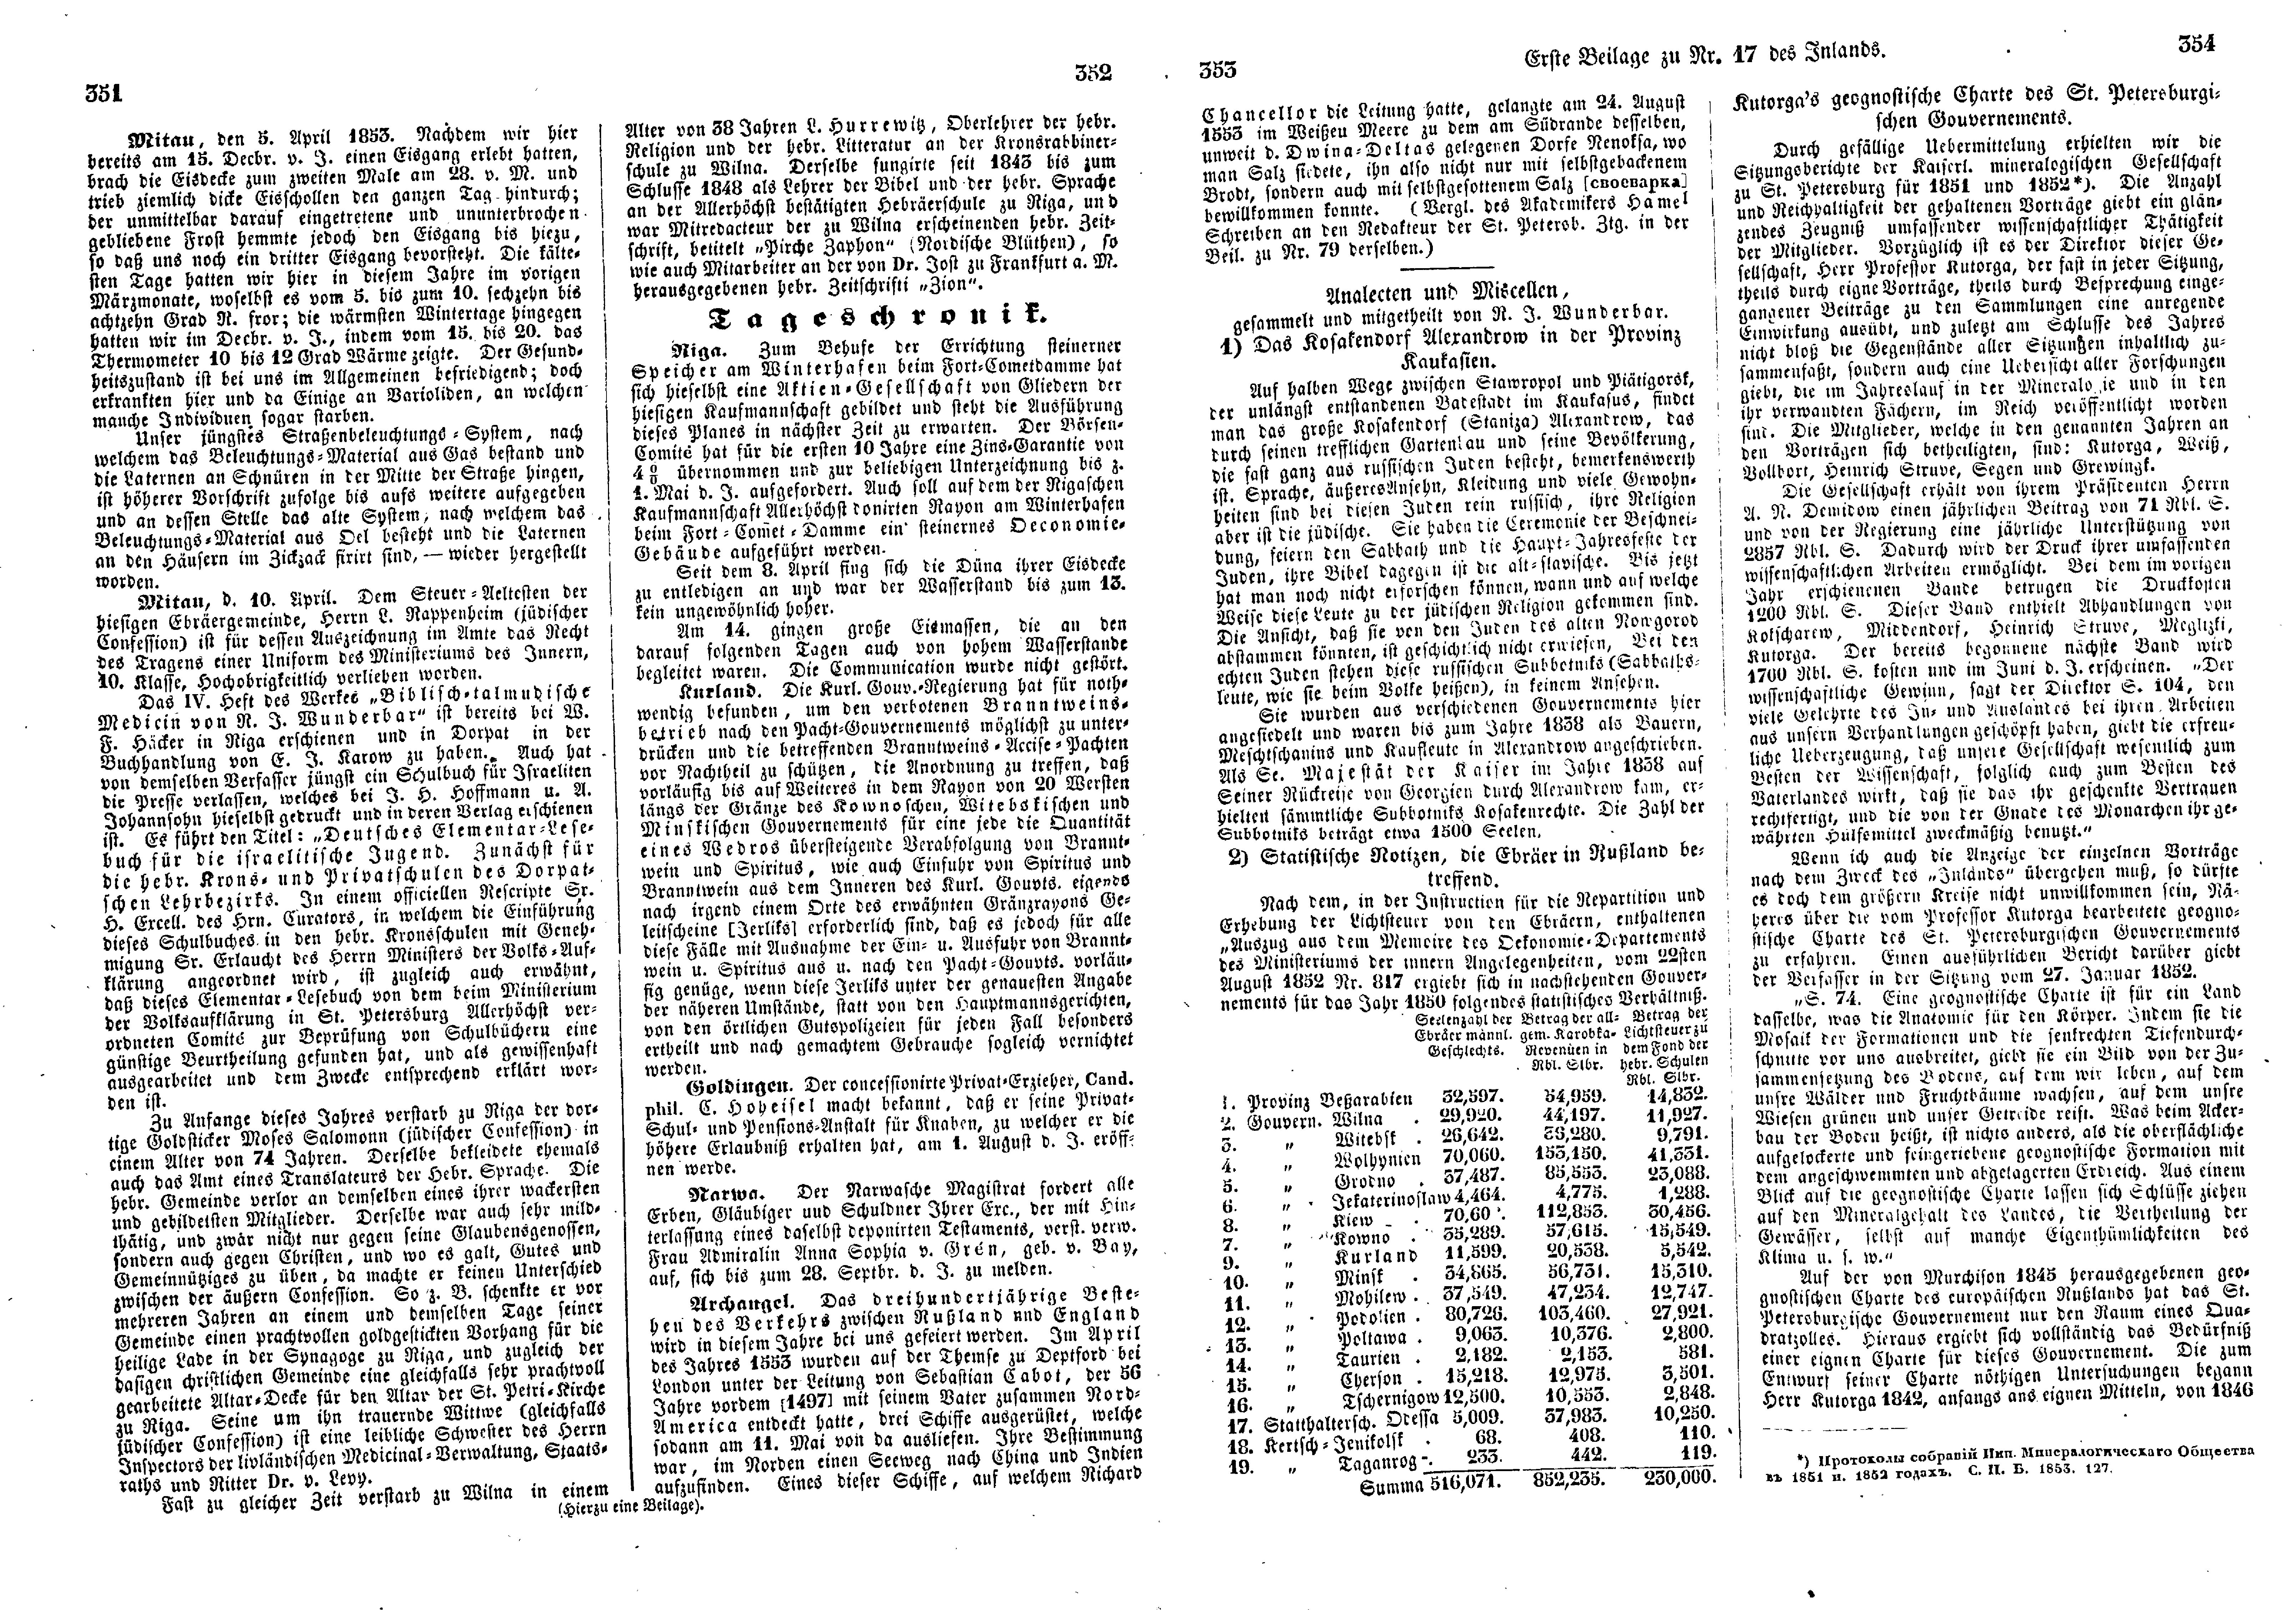 Das Inland [18] (1853) | 98. (351-354) Main body of text